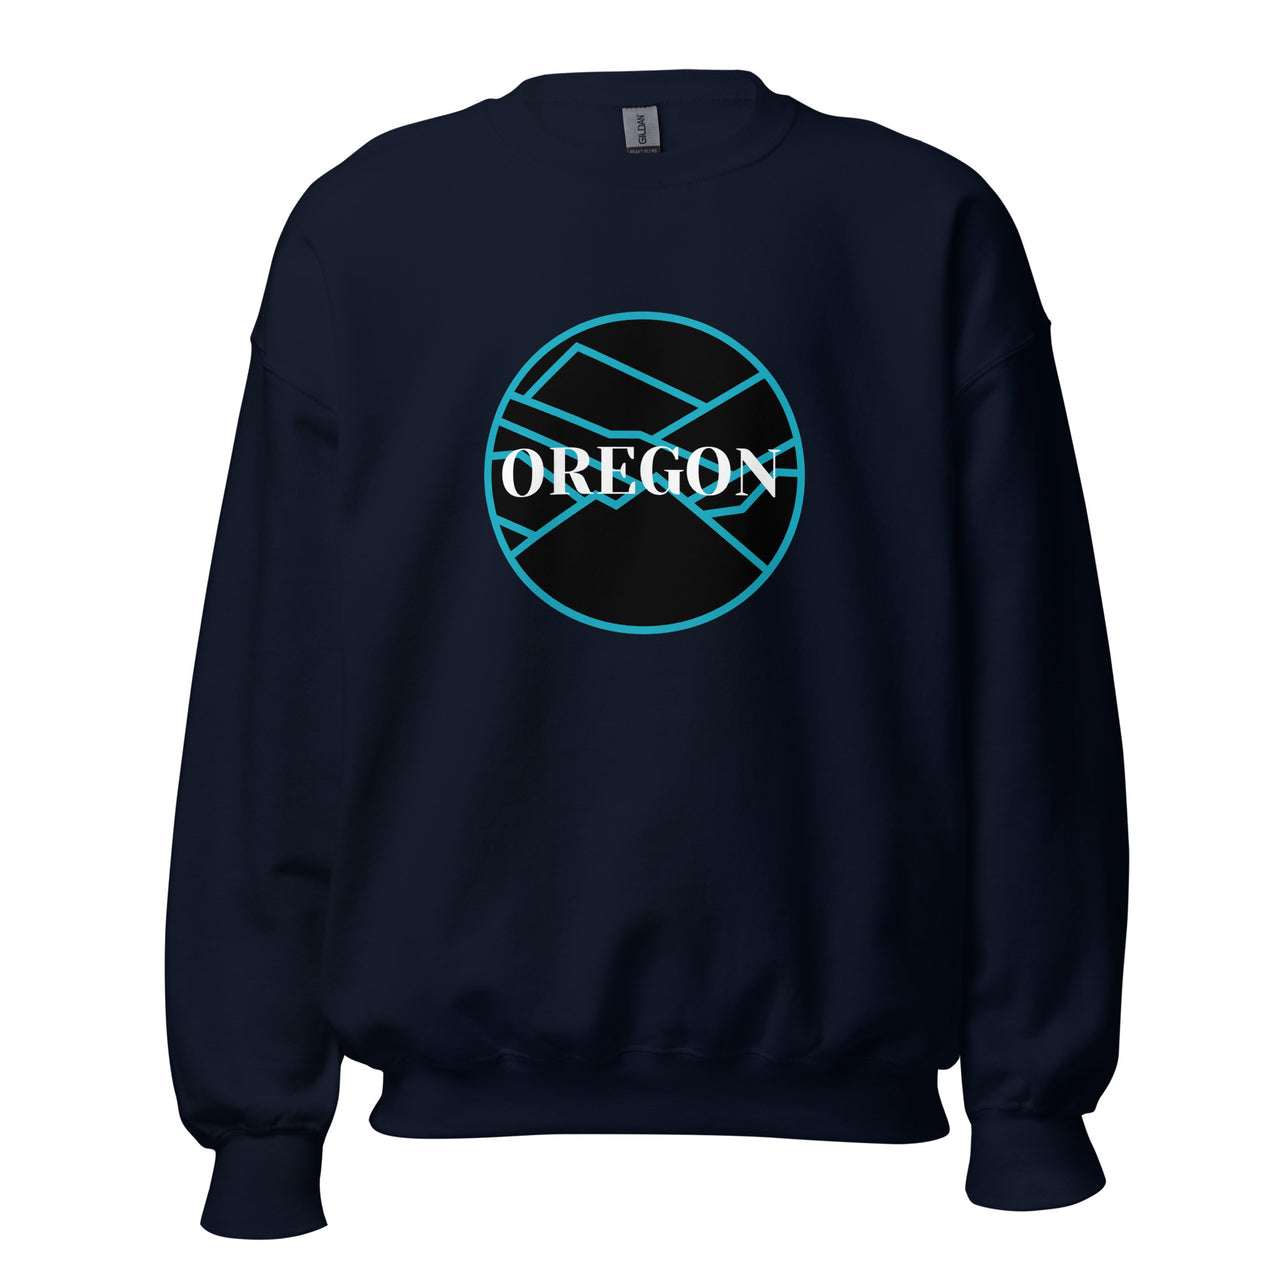 Oregon - Blue/Black - Unisex Sweatshirt